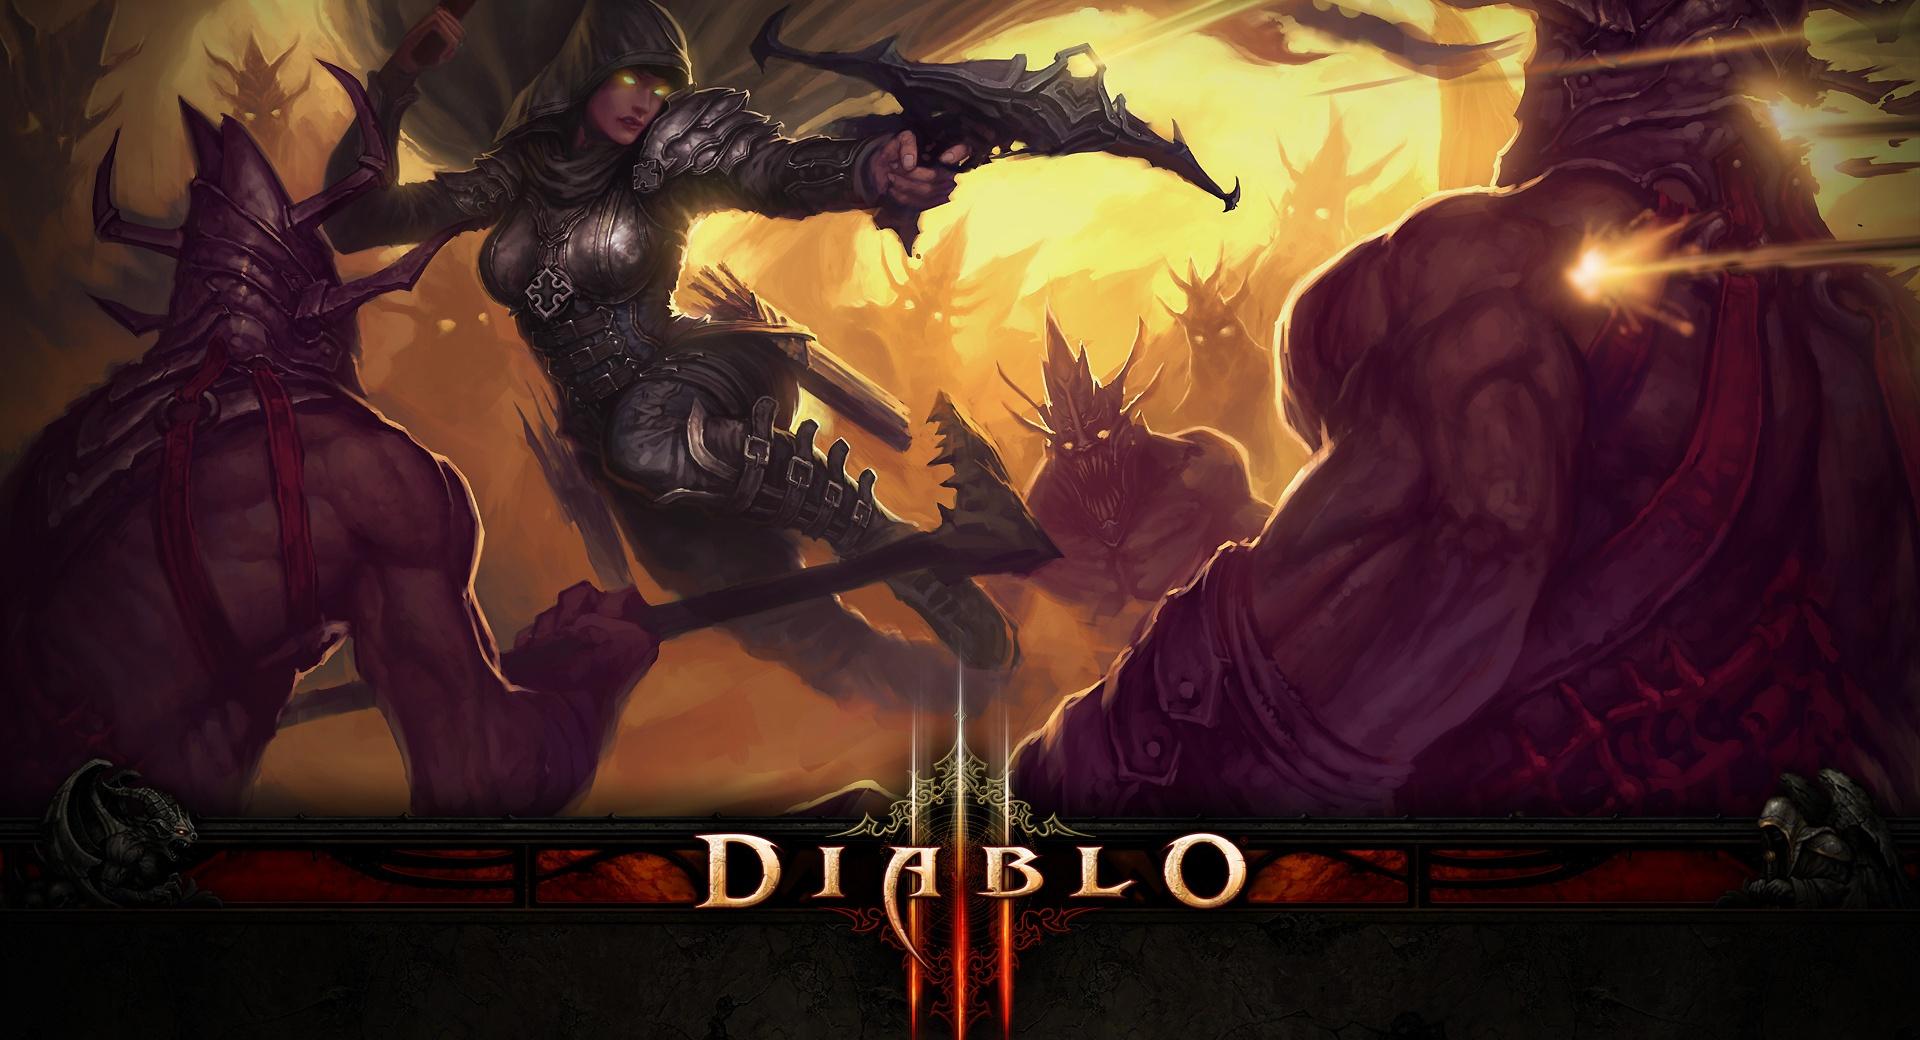 Diablo III Demon Hunter at 2048 x 2048 iPad size wallpapers HD quality